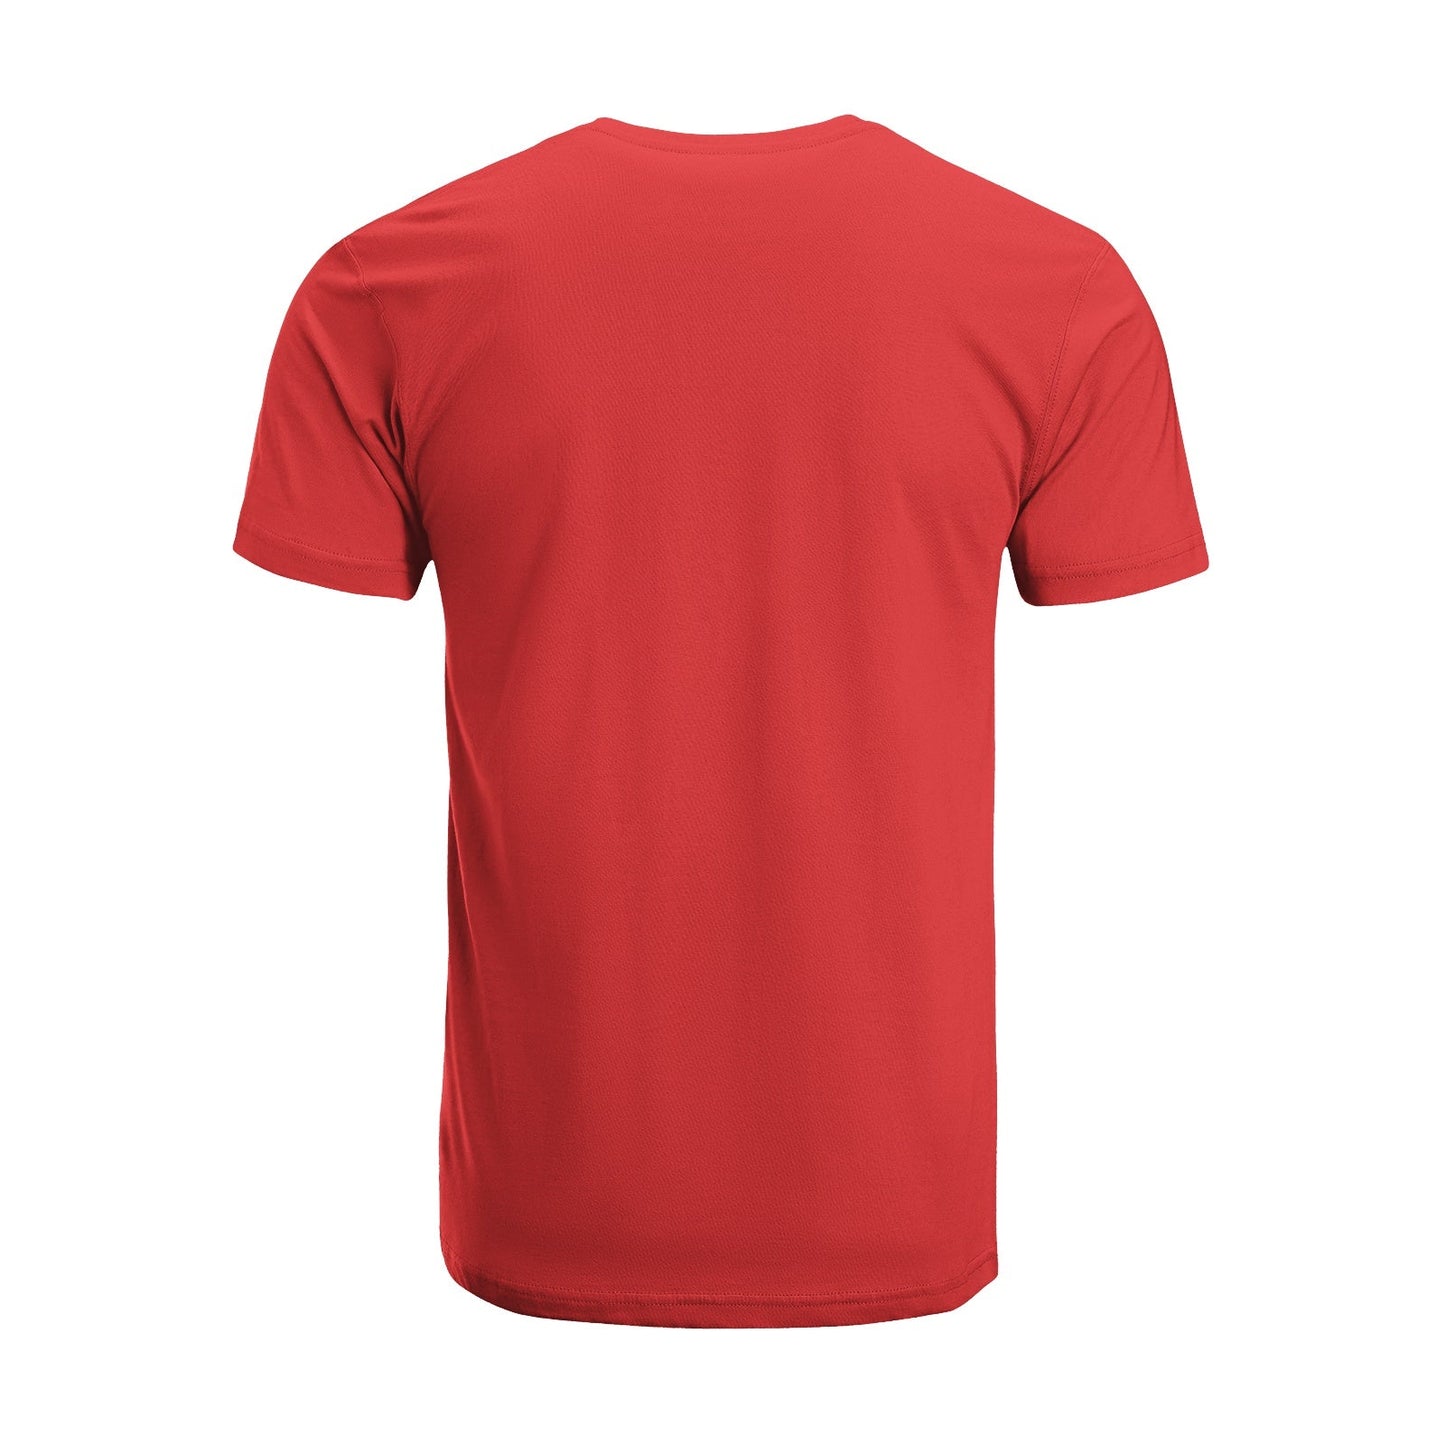 Unisex Short Sleeve Crew Neck Cotton Jersey T-Shirt MOM 19